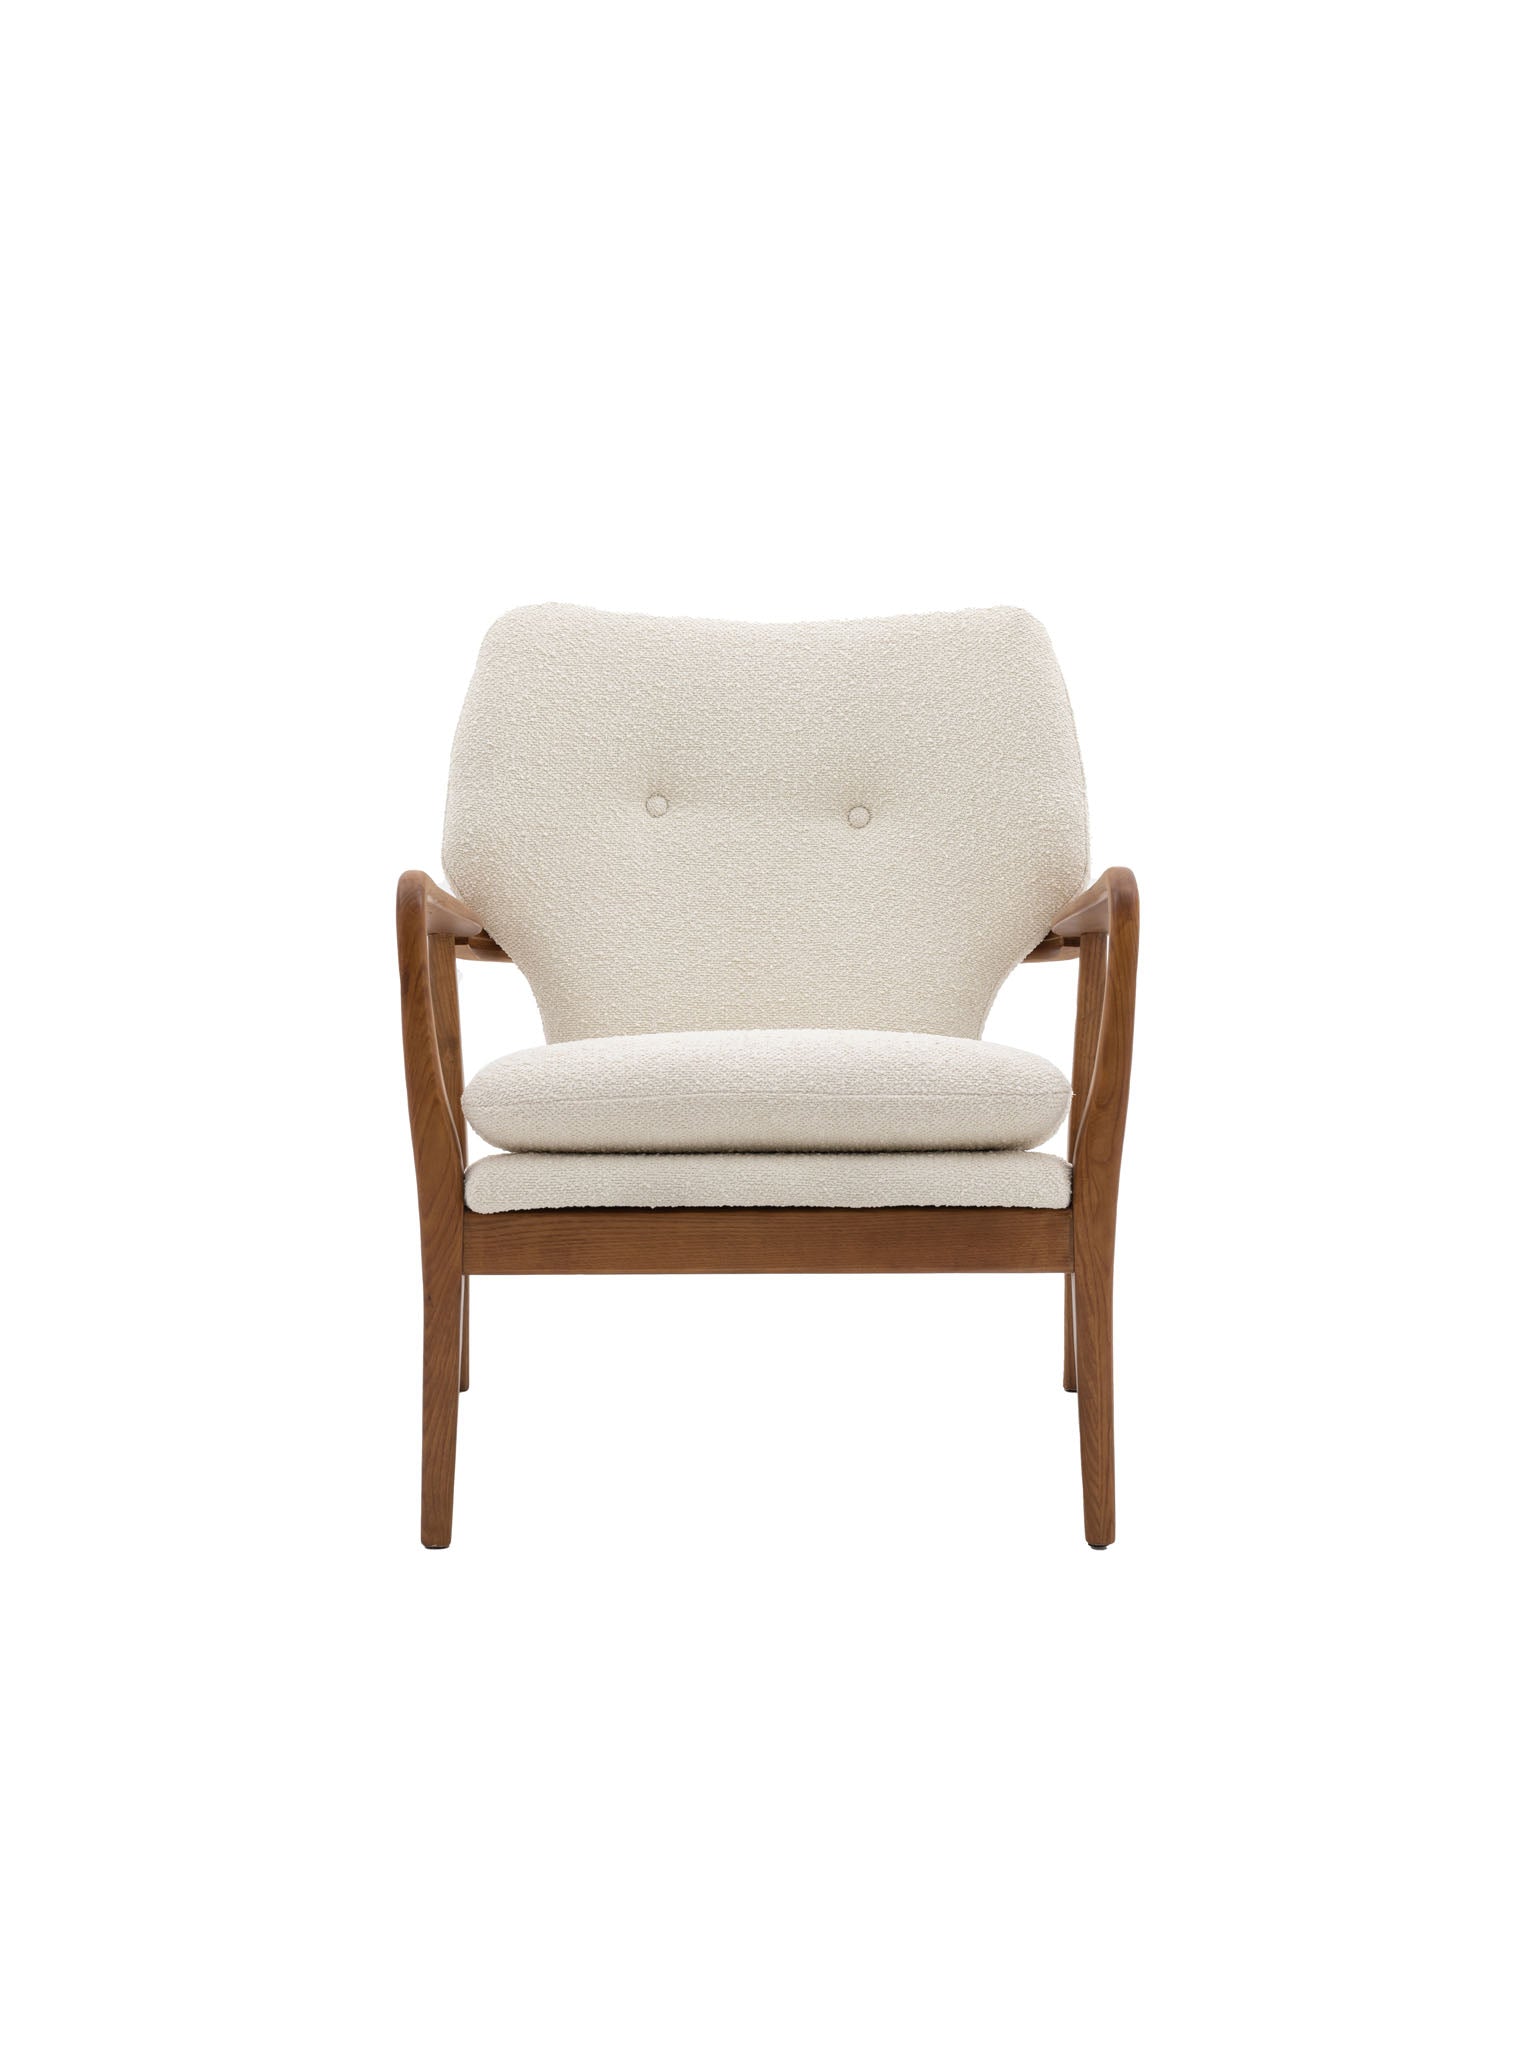 cream mid century chair